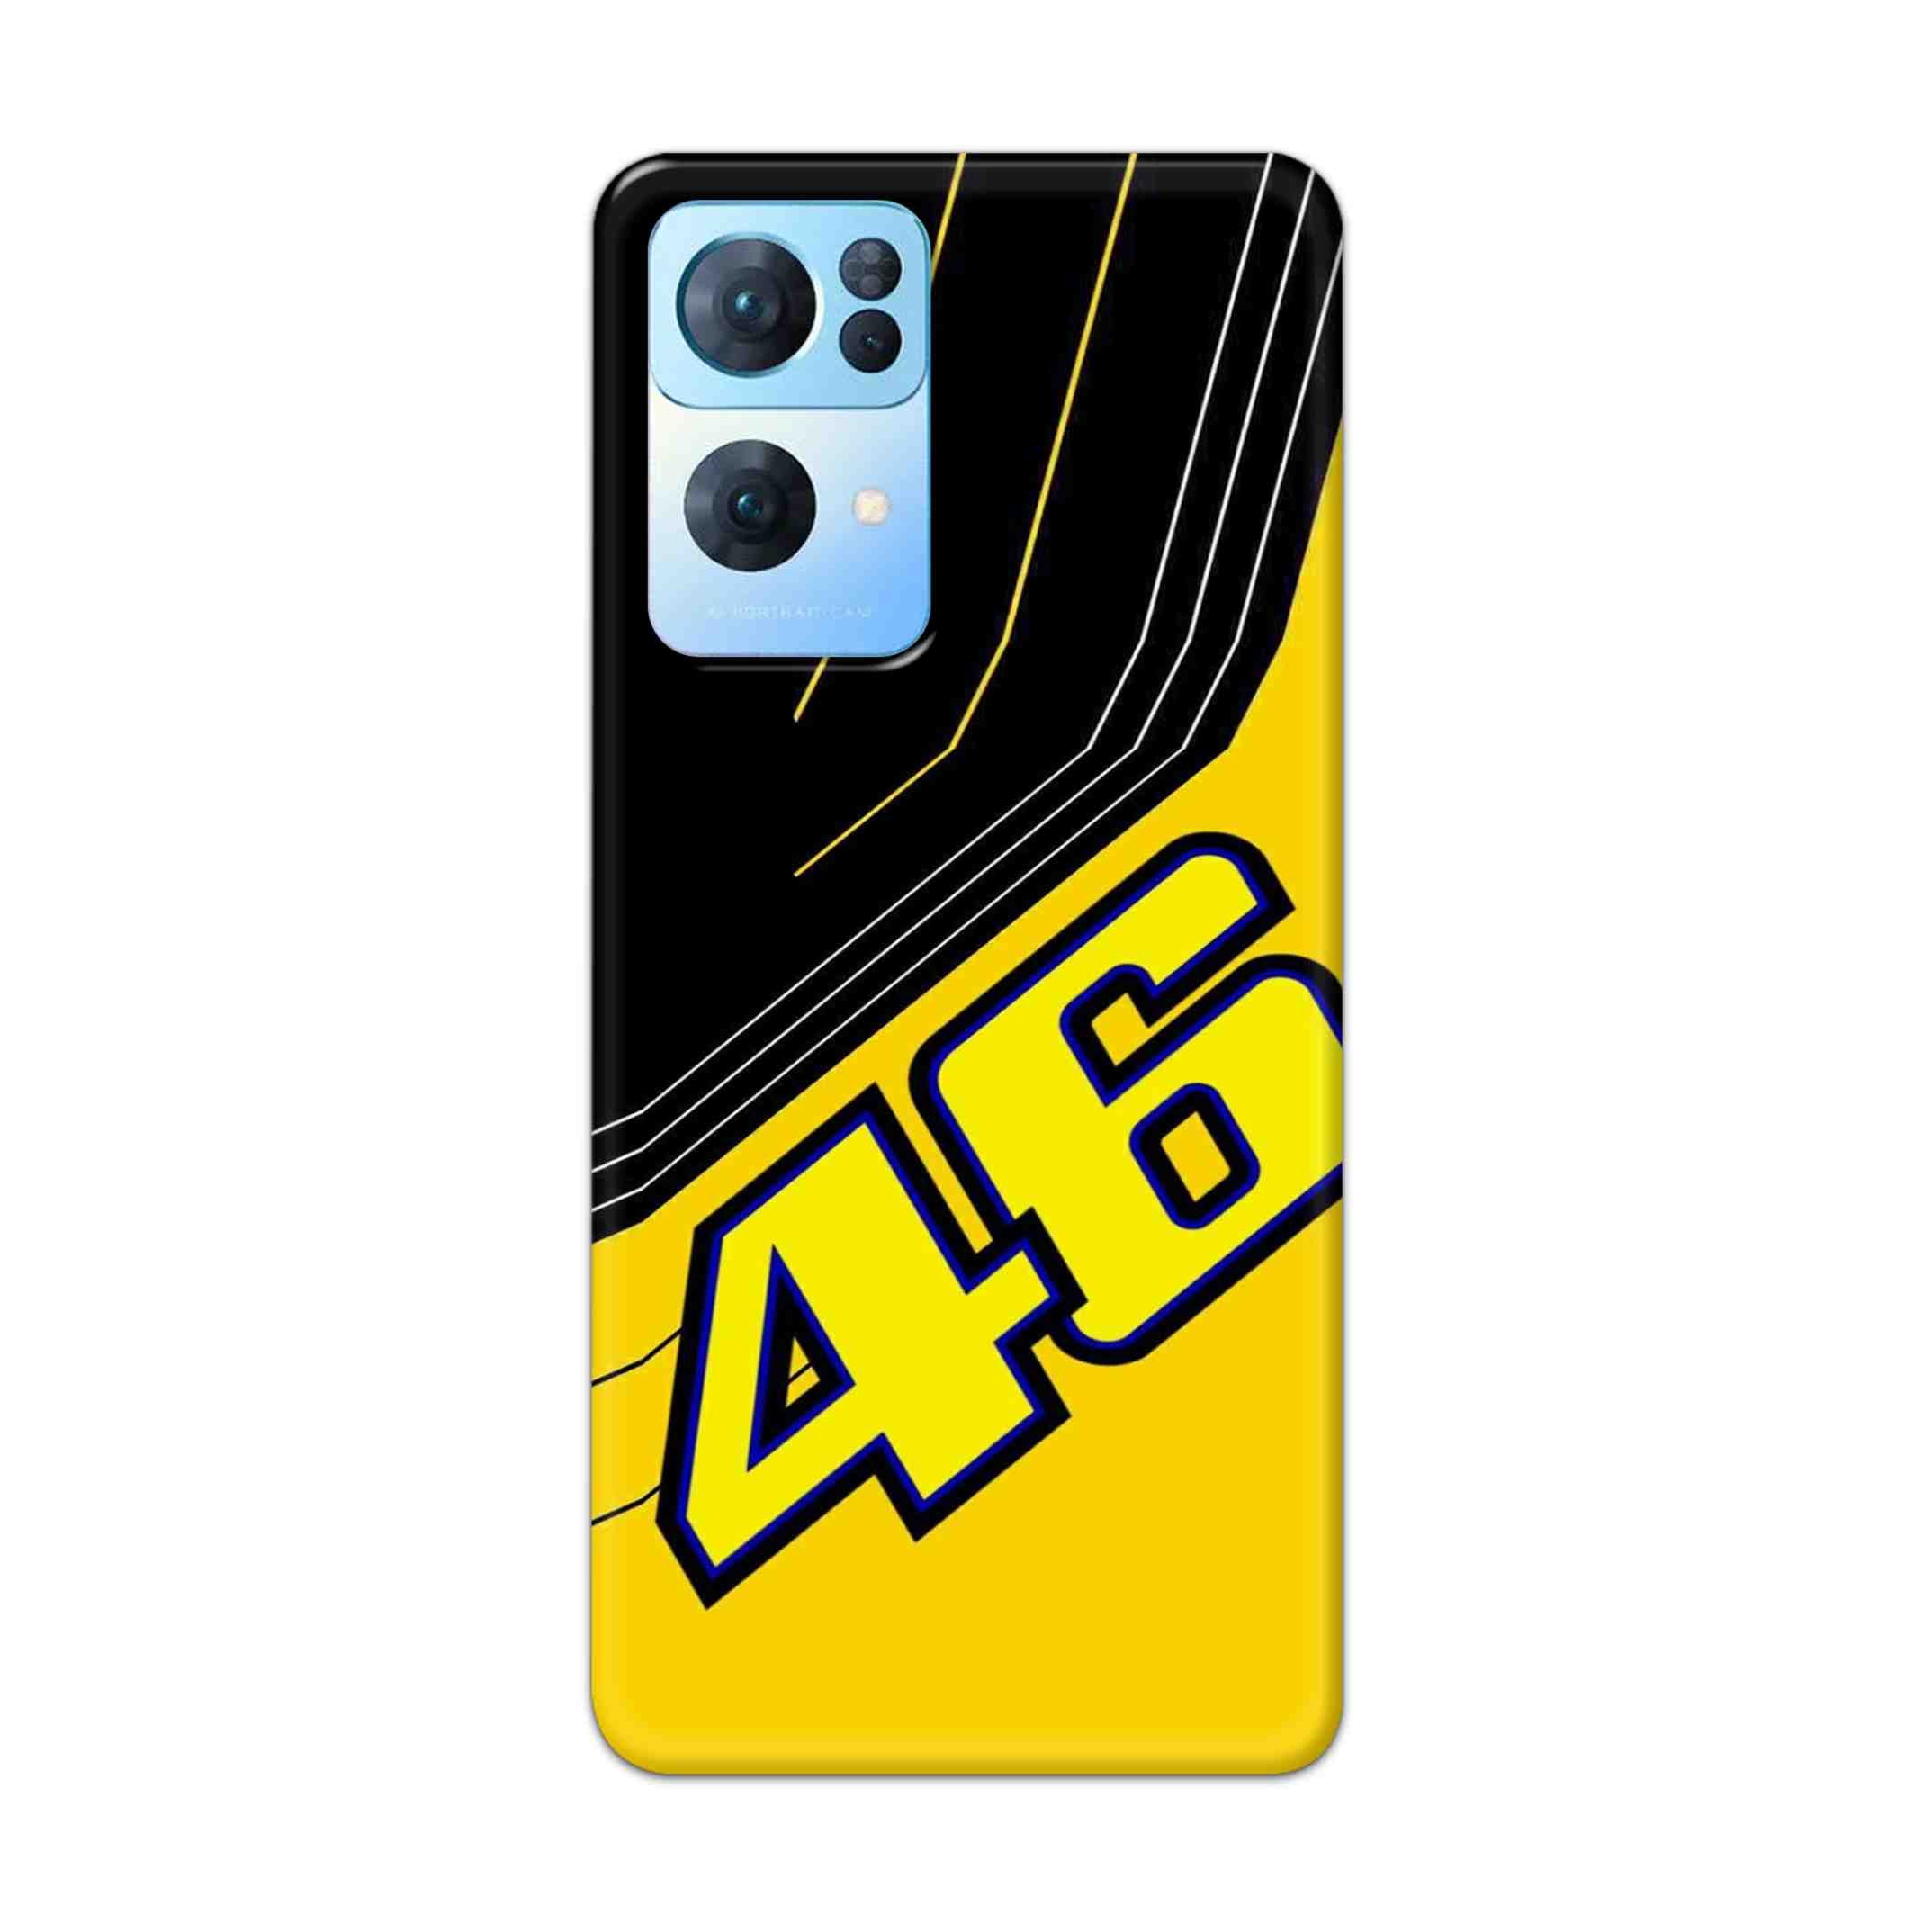 Buy 46 Hard Back Mobile Phone Case Cover For Oppo Reno 7 Pro Online